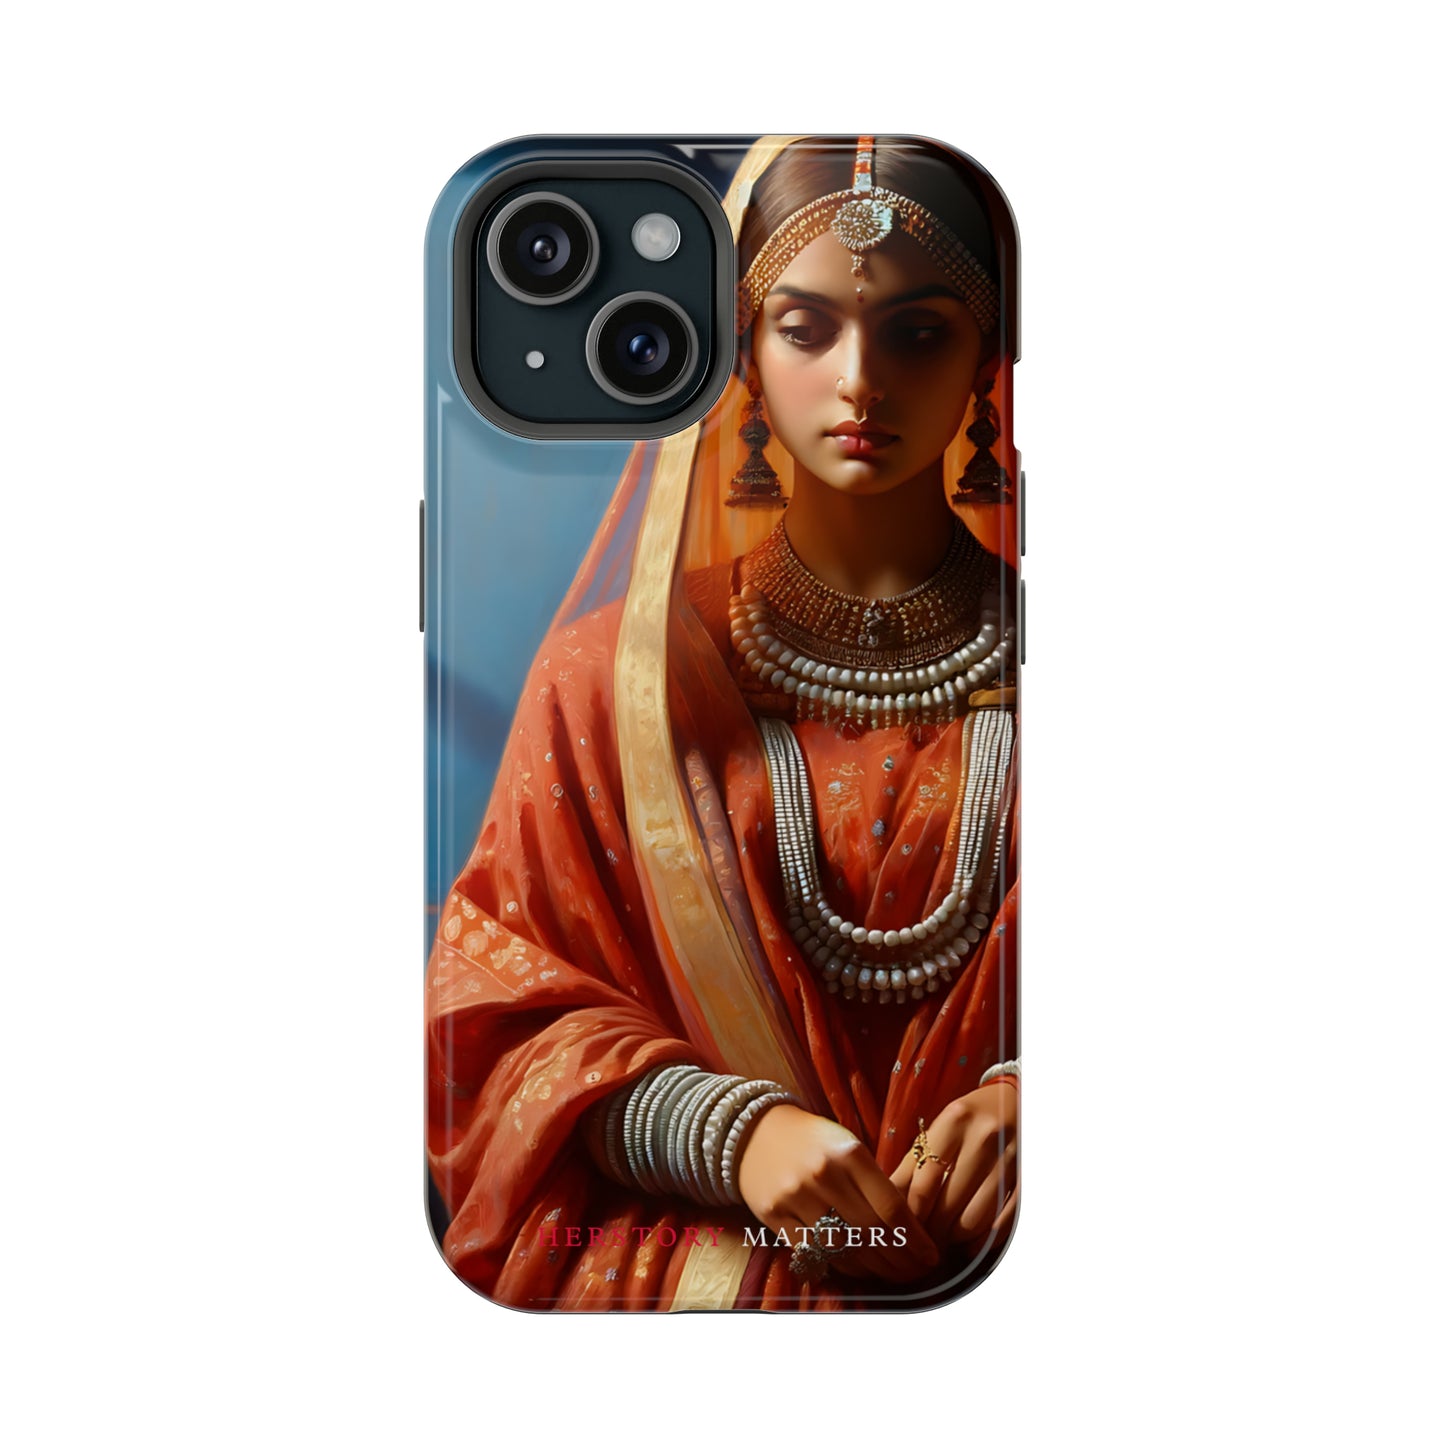 Rajput Princess in Contemplation MagSafe Tough Mobile Phone Cases